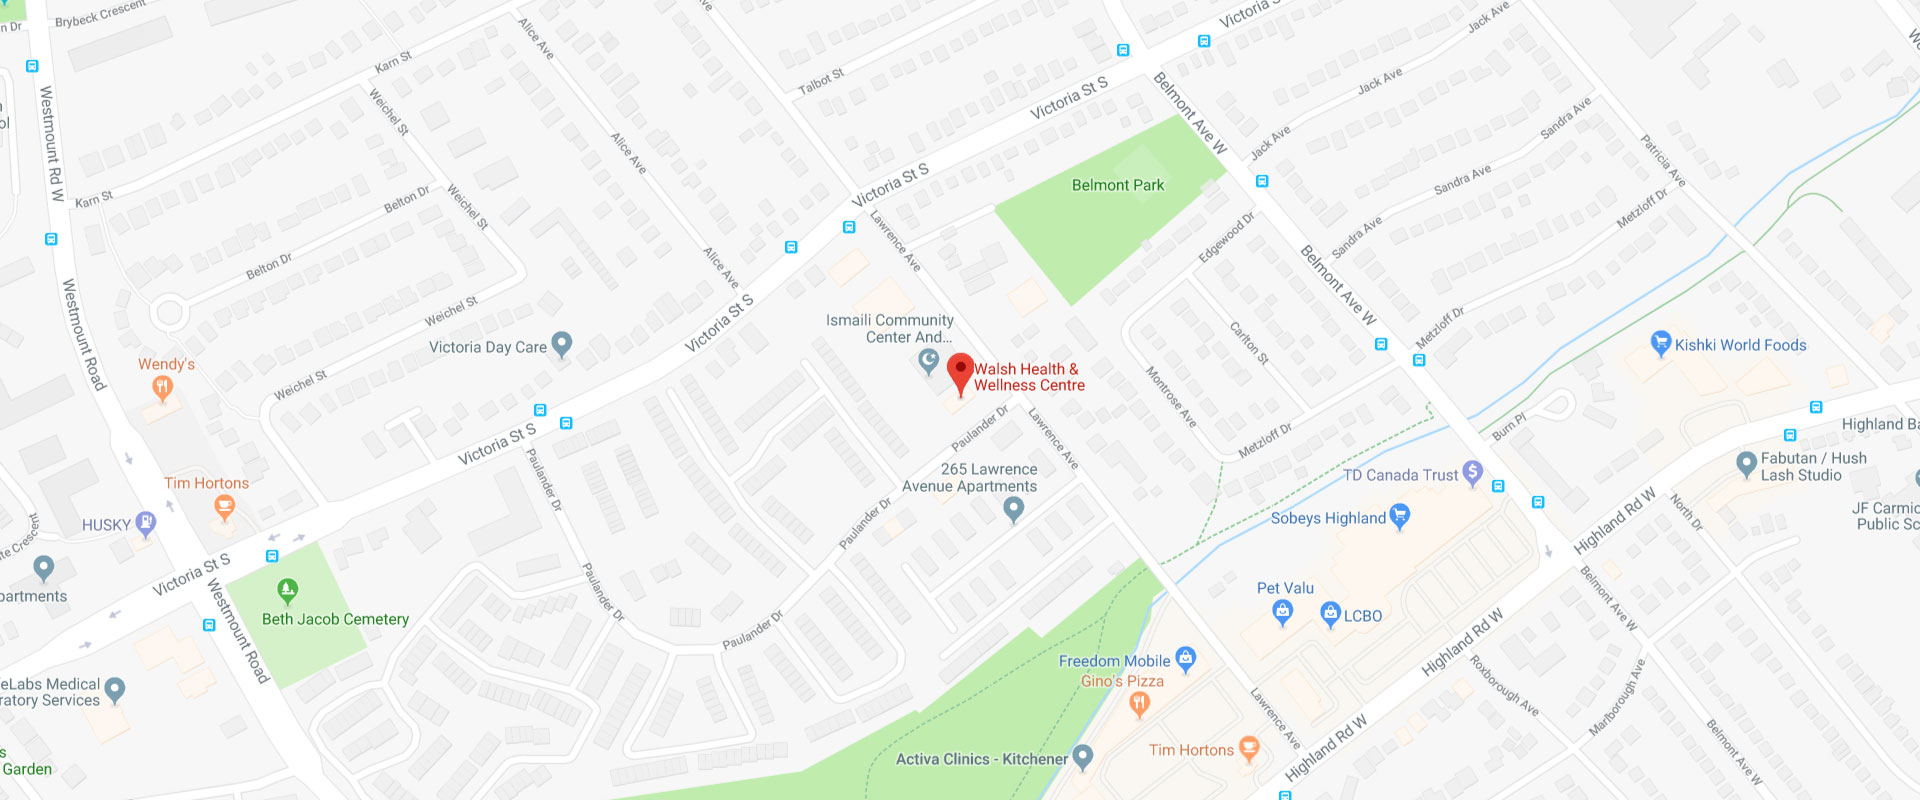 Walsh Health & Wellness Centre location on Google Maps